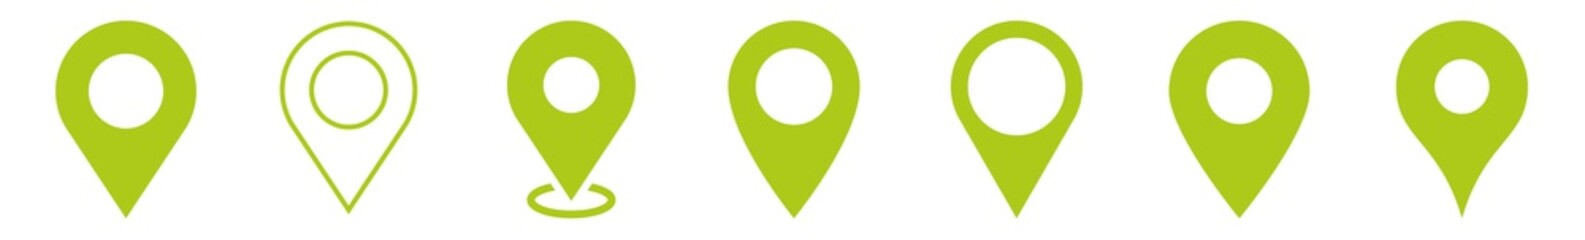 Location Pin Icon Green | Map Marker Illustration | Destination Symbol | Pointer Logo | Position Sign | Isolated | Variations